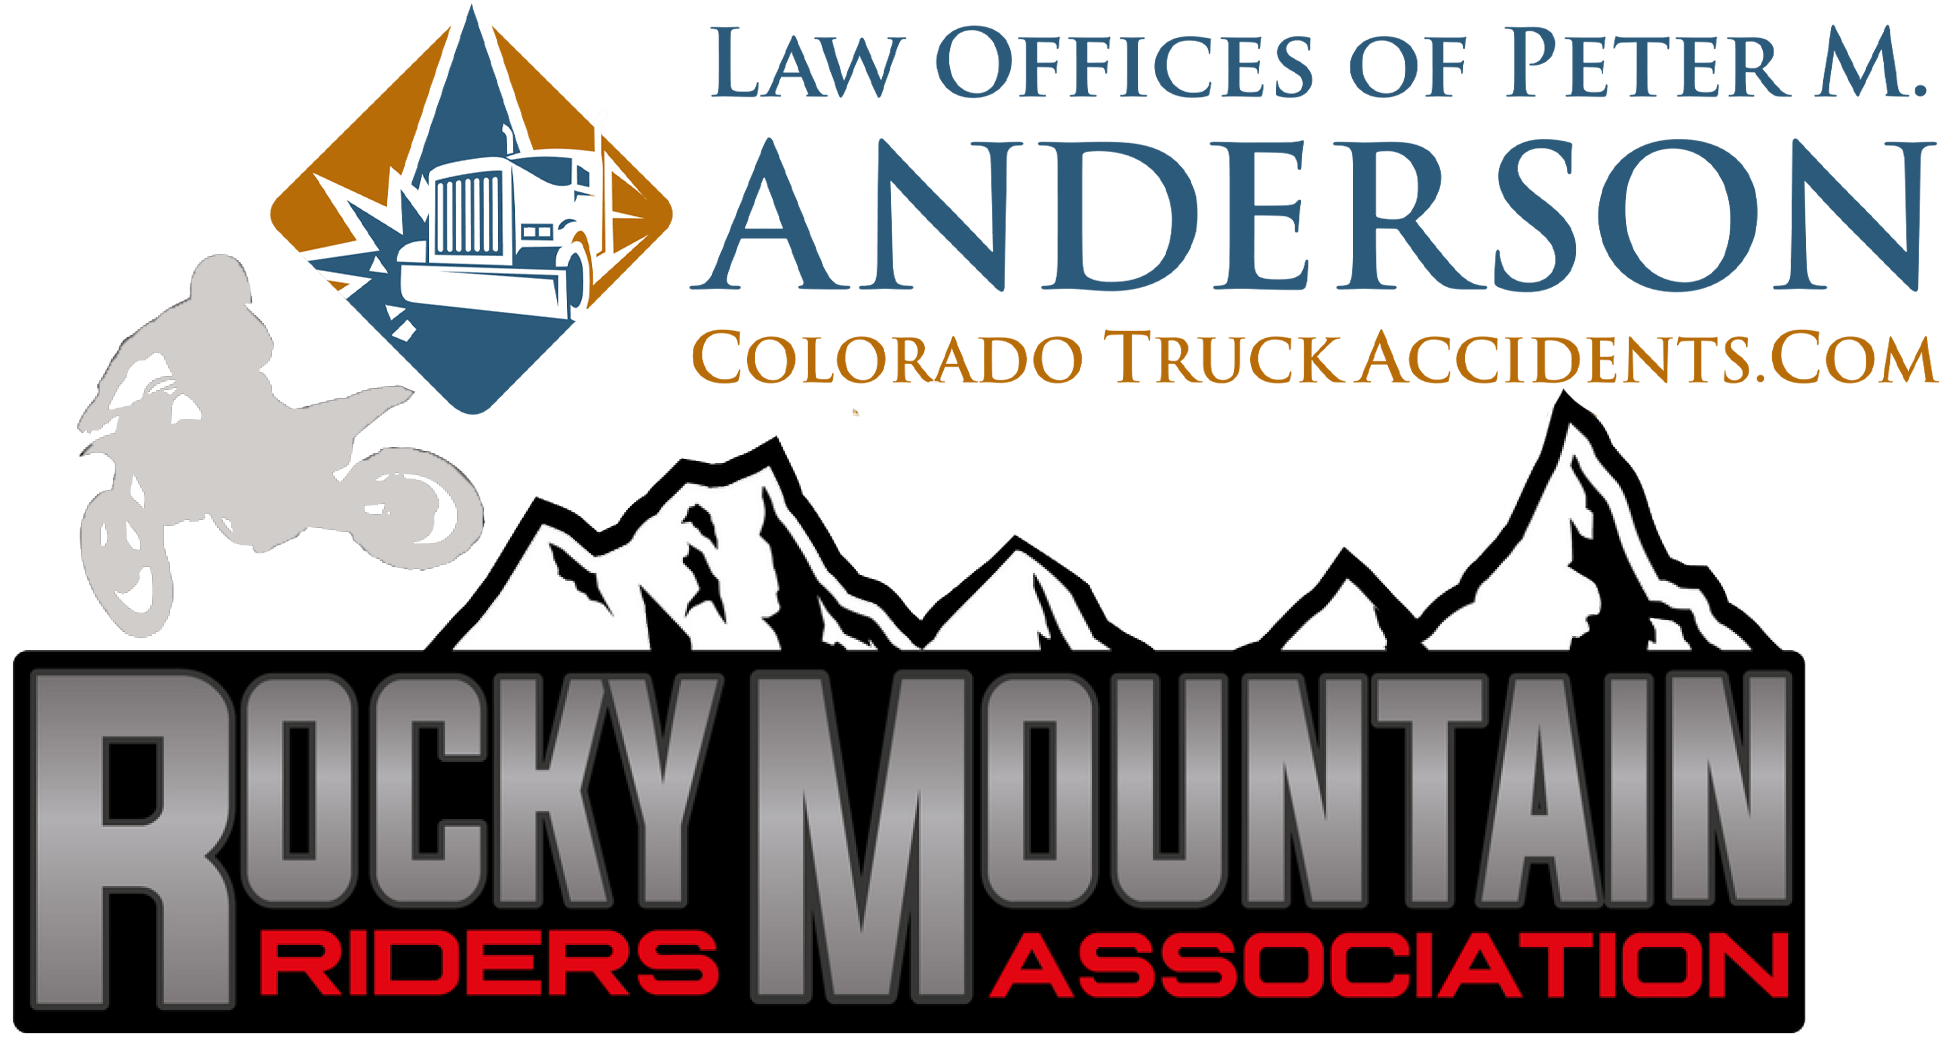 Rocky Mountain Riders Association